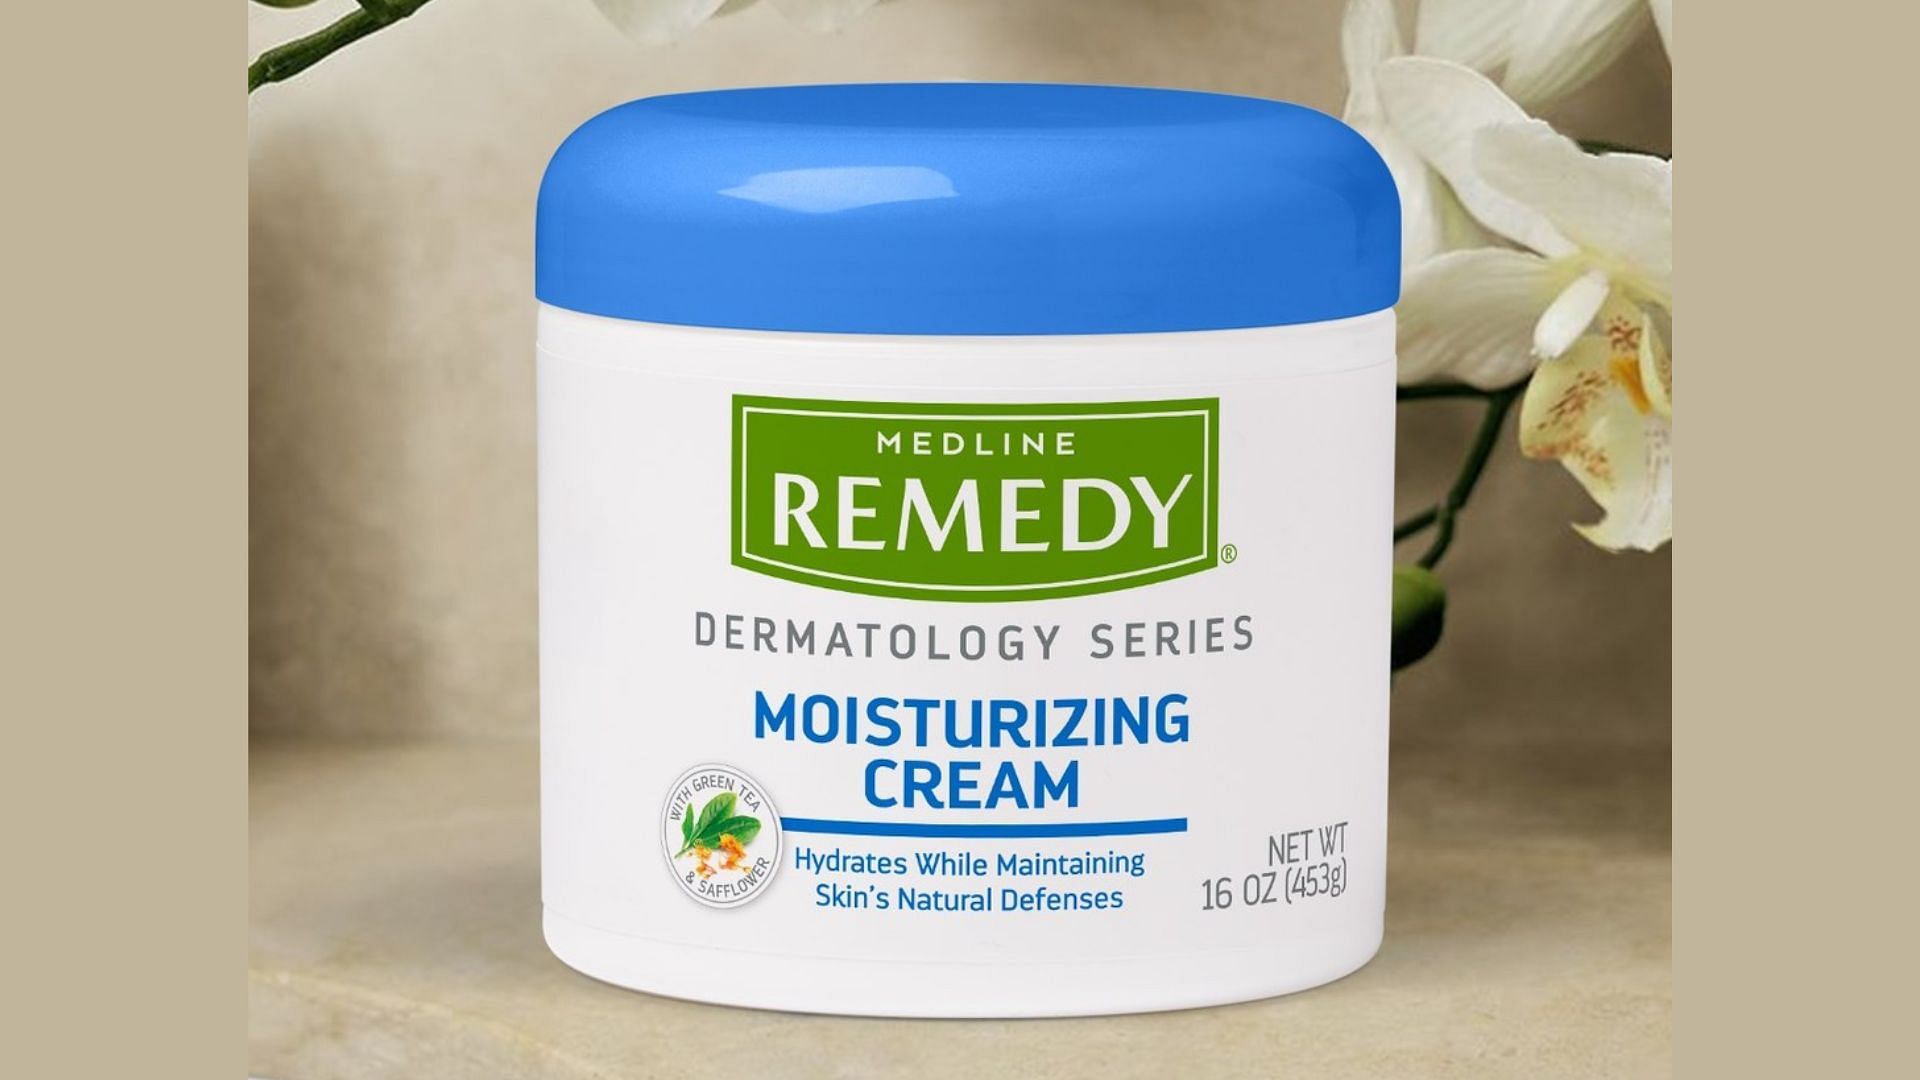 Remedy moisturizing cream (Image via @remedyskinhealth/ Instagram)